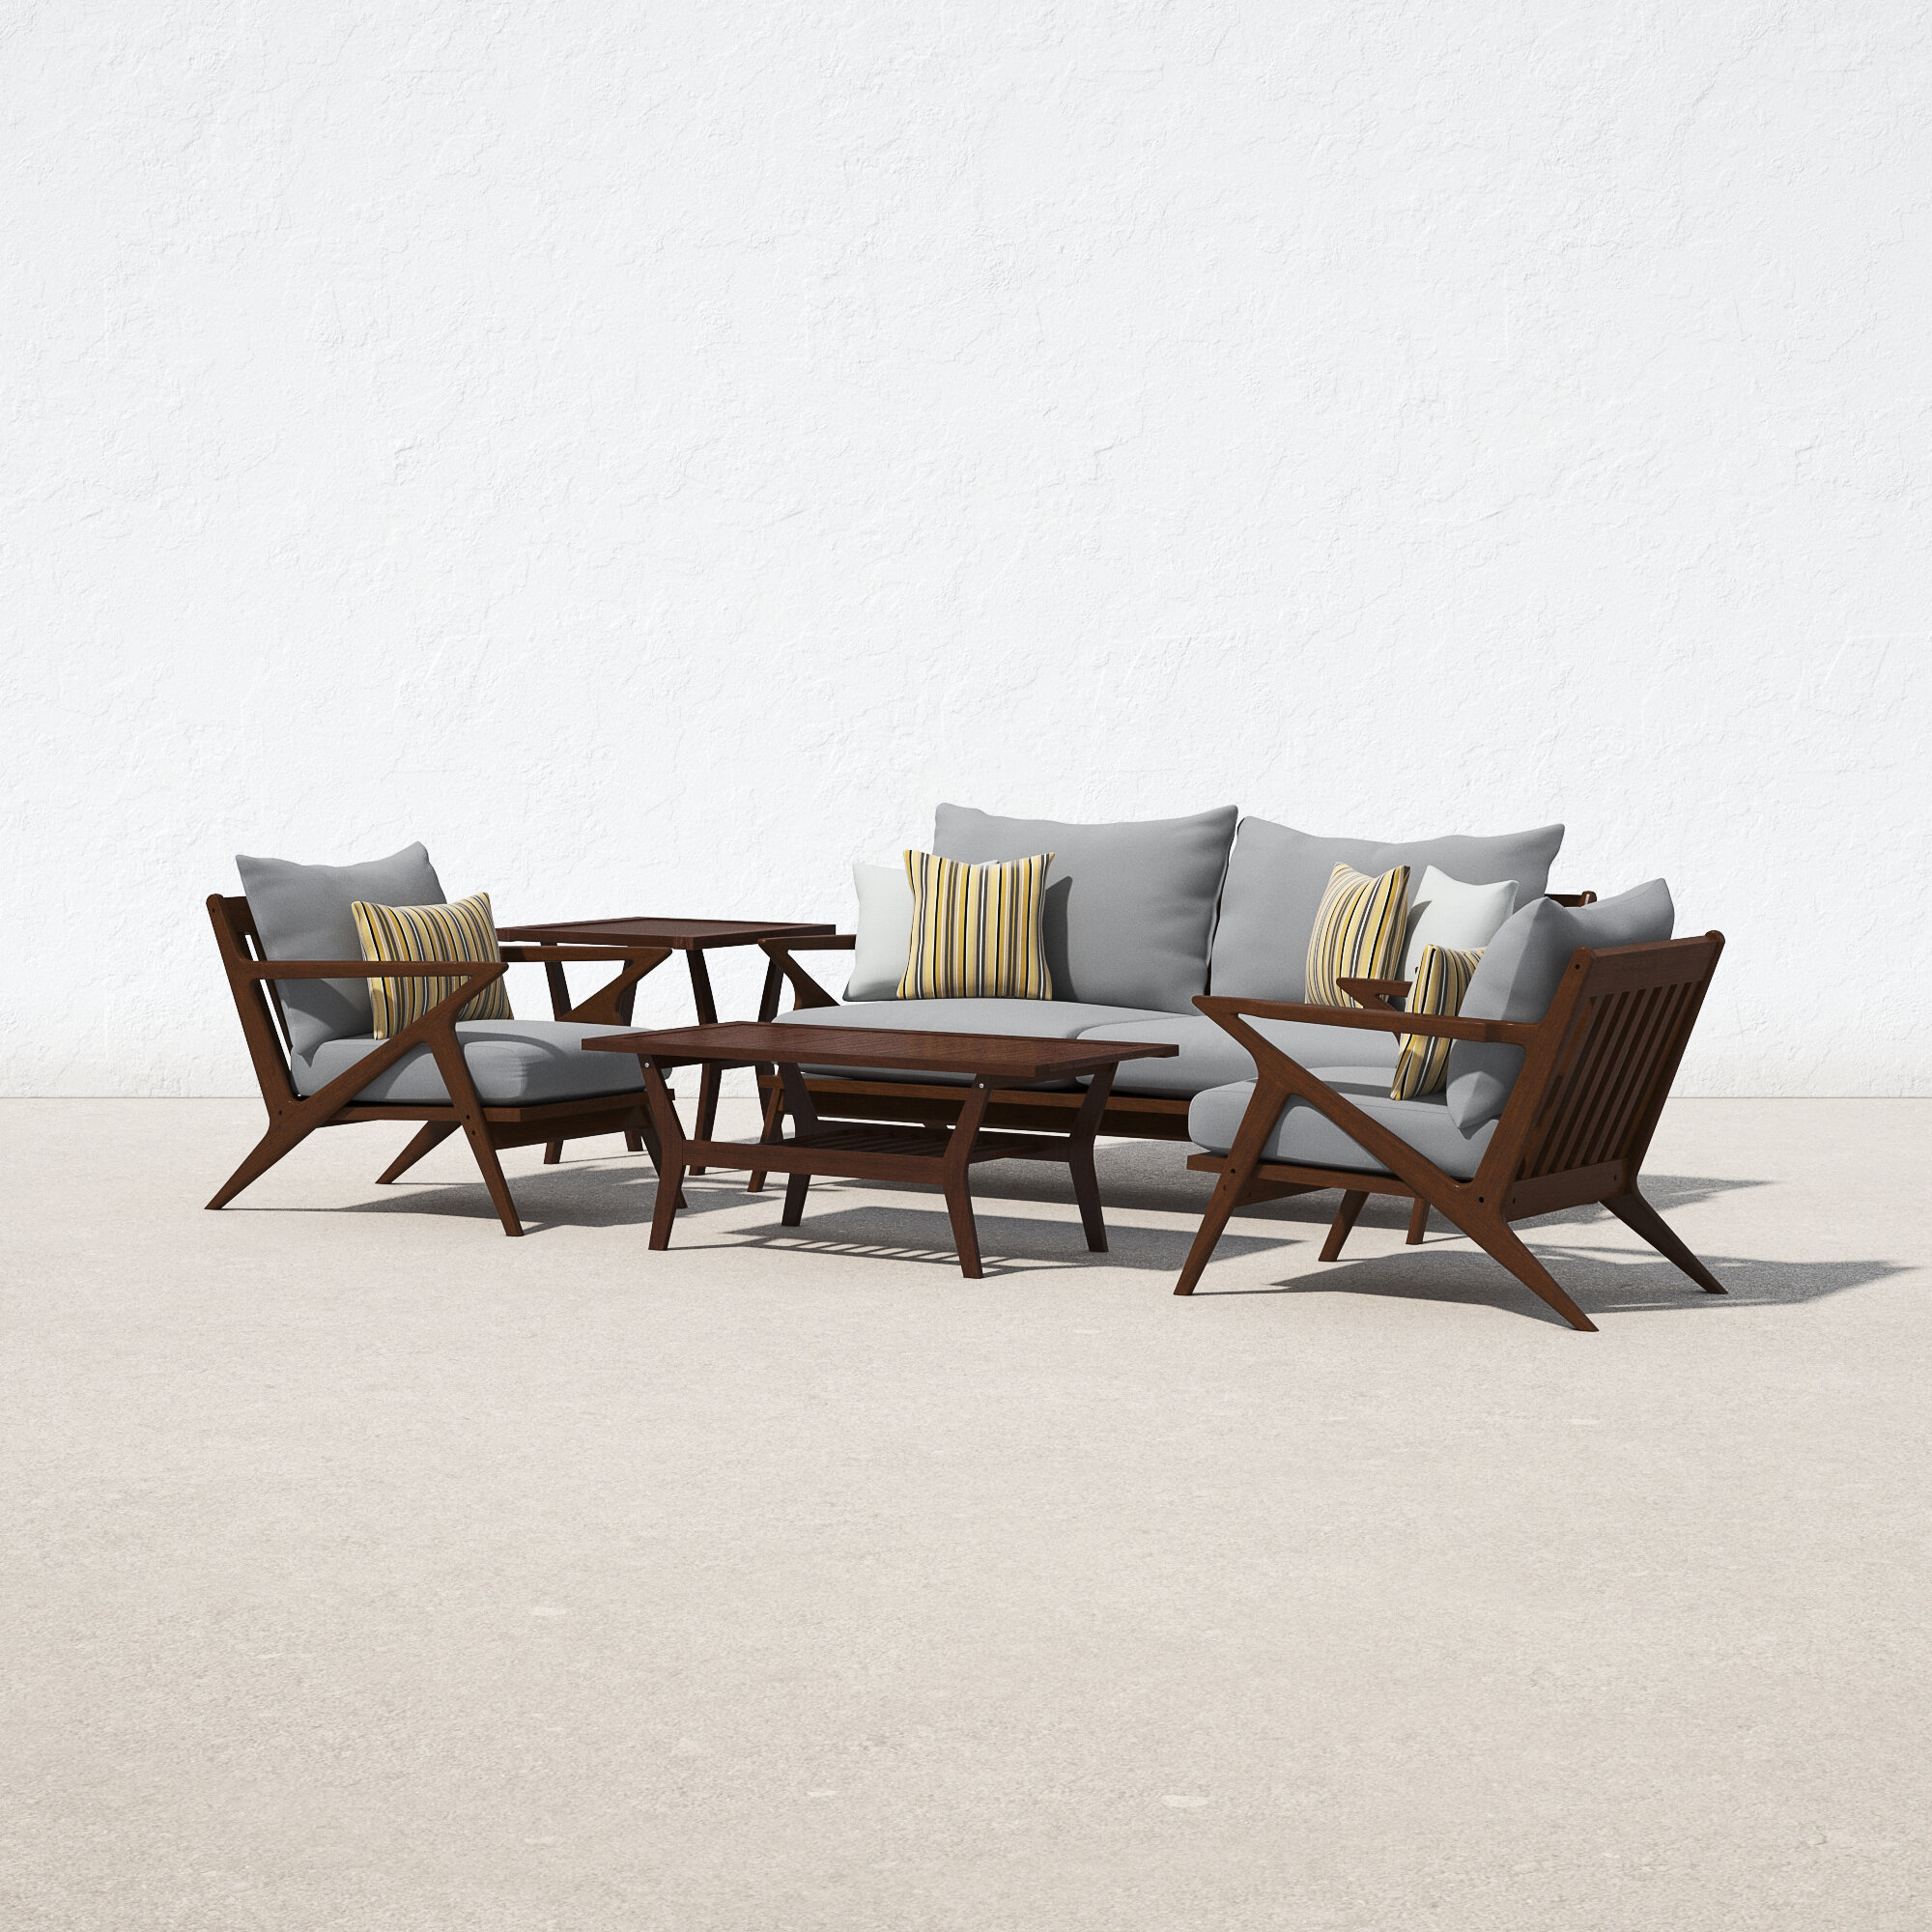 Why We Love Sunbrella Fabrics – Sunniland Patio - Patio Furniture